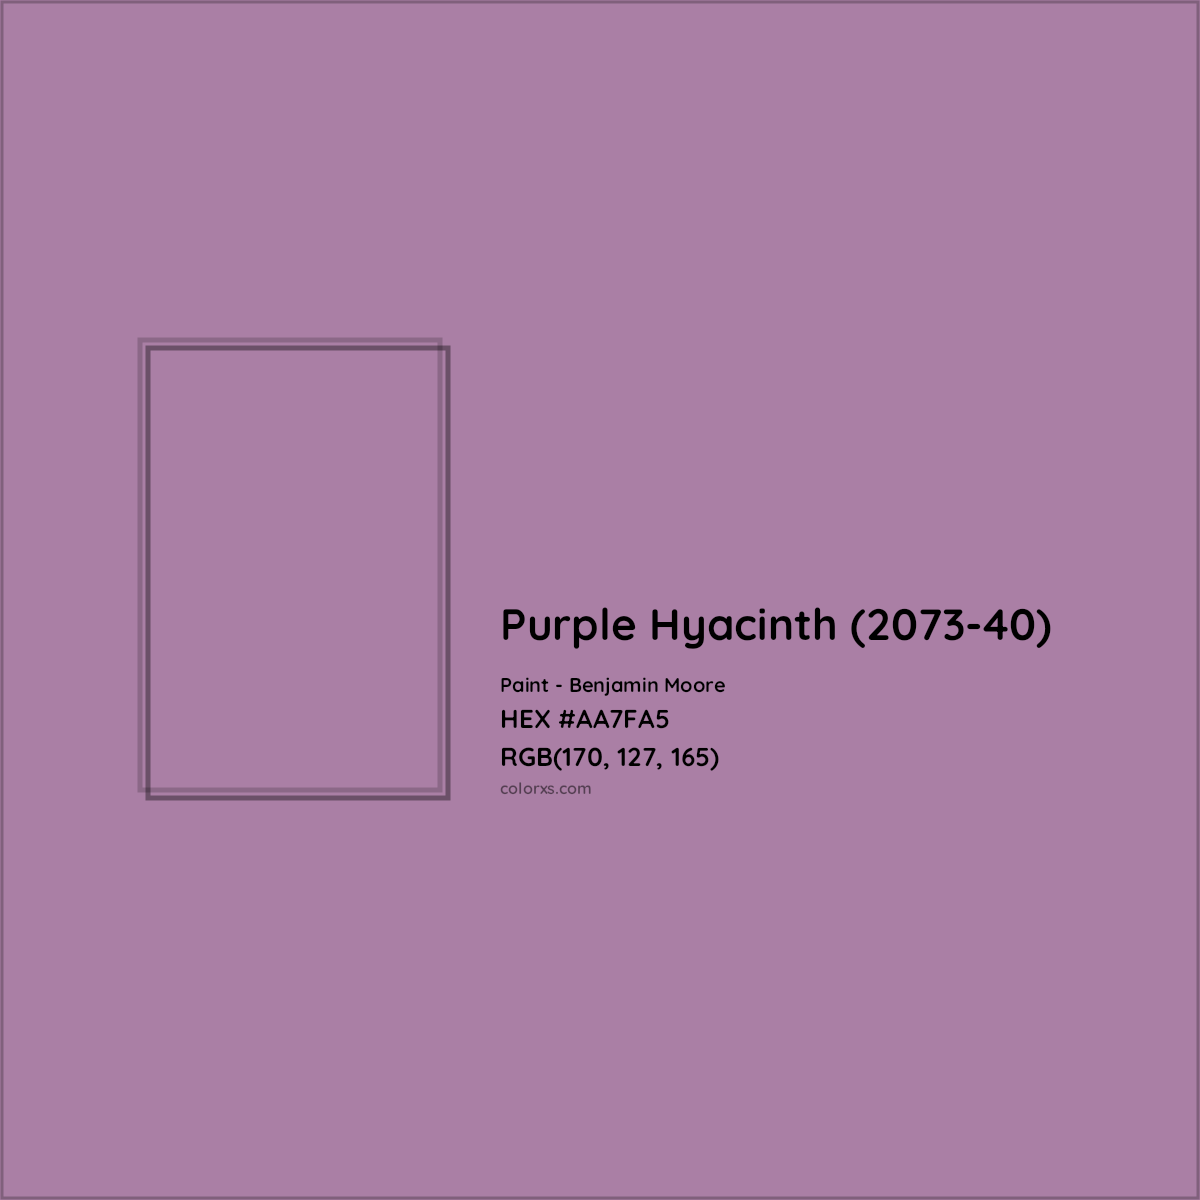 HEX #AA7FA5 Purple Hyacinth (2073-40) Paint Benjamin Moore - Color Code